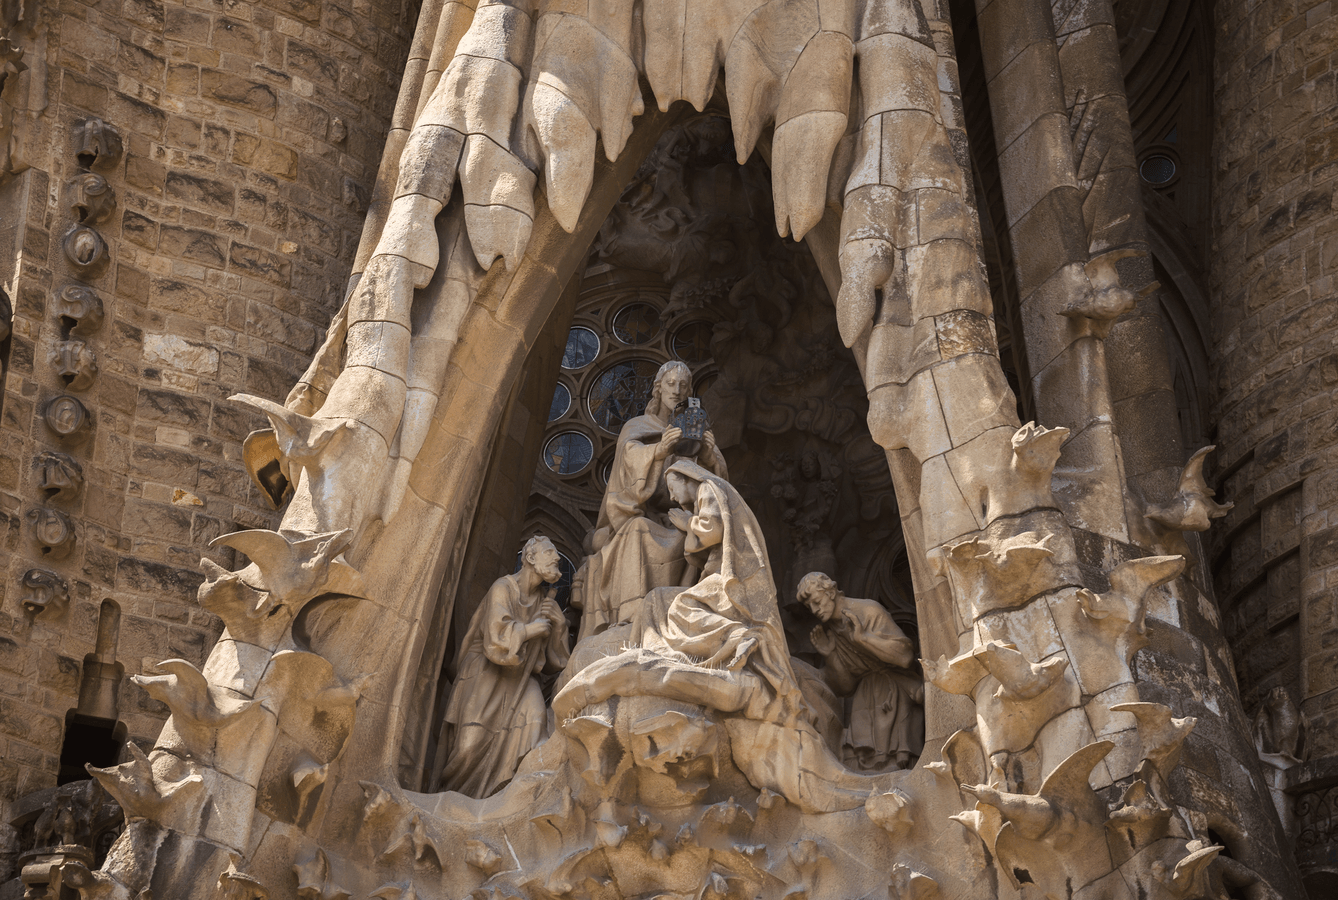 Sagrada Familia by Gaudi - Basilica in Barcelona, Spain - 137 Year Project 41